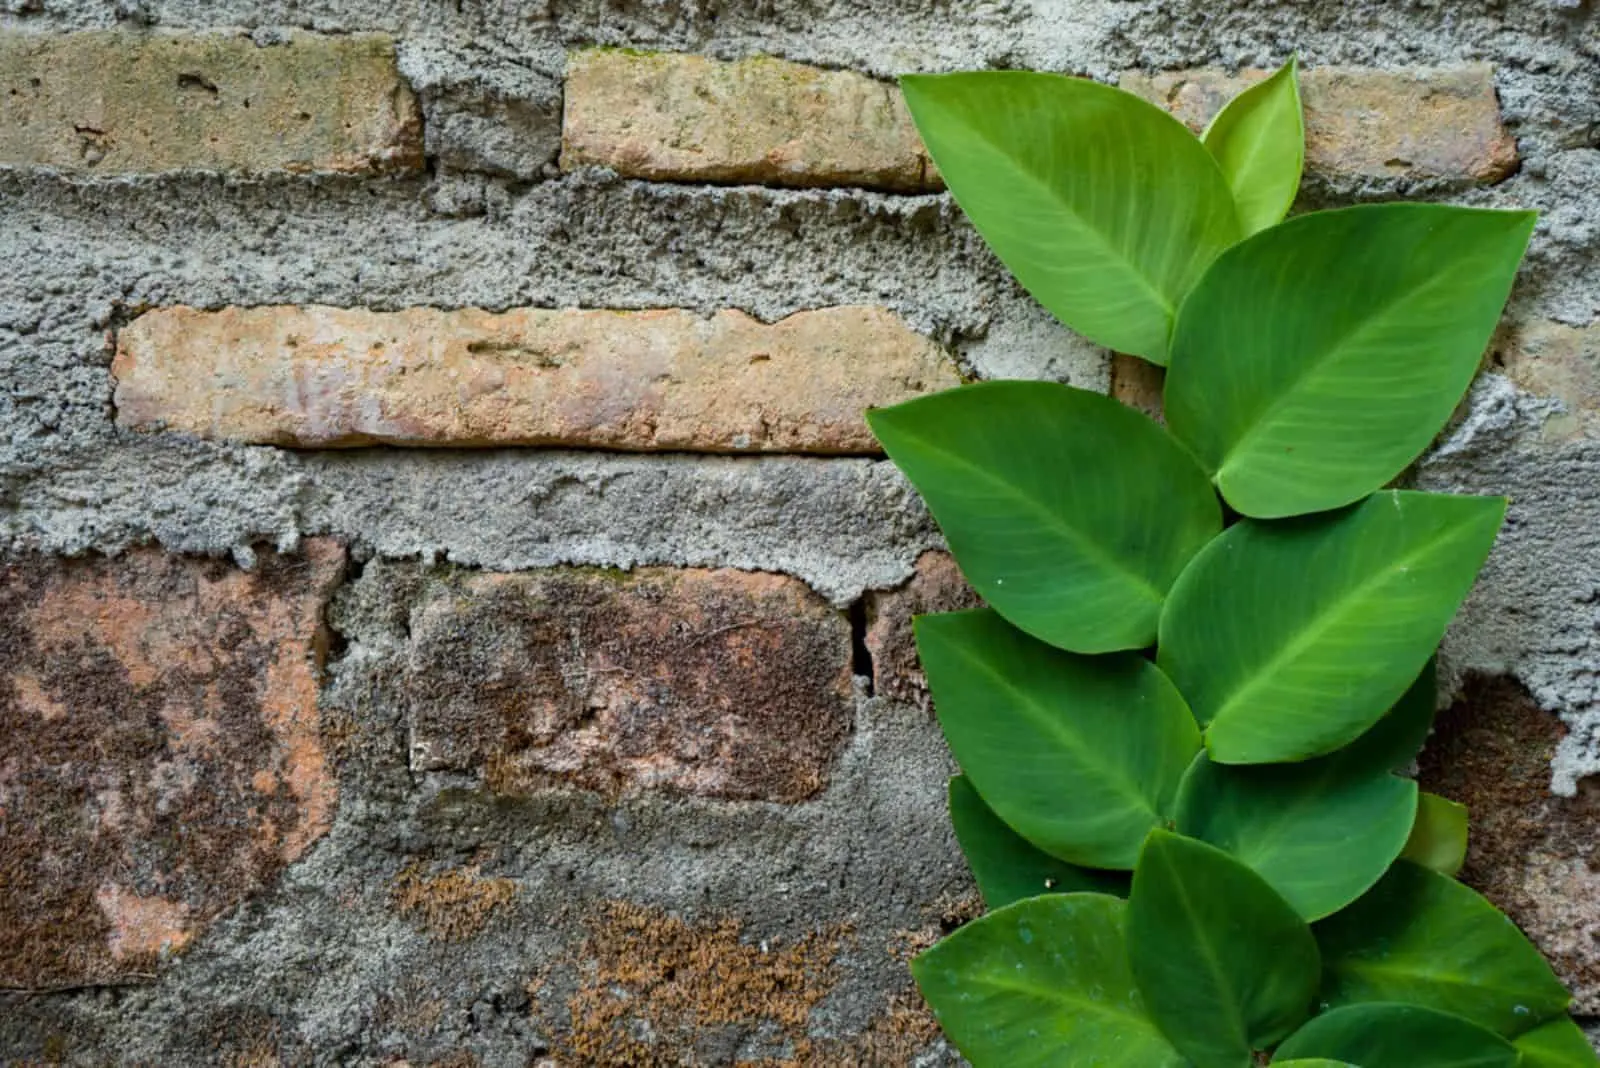 Rhaphidophora celatocaulis trees leaves propagating on the edge of brick wall